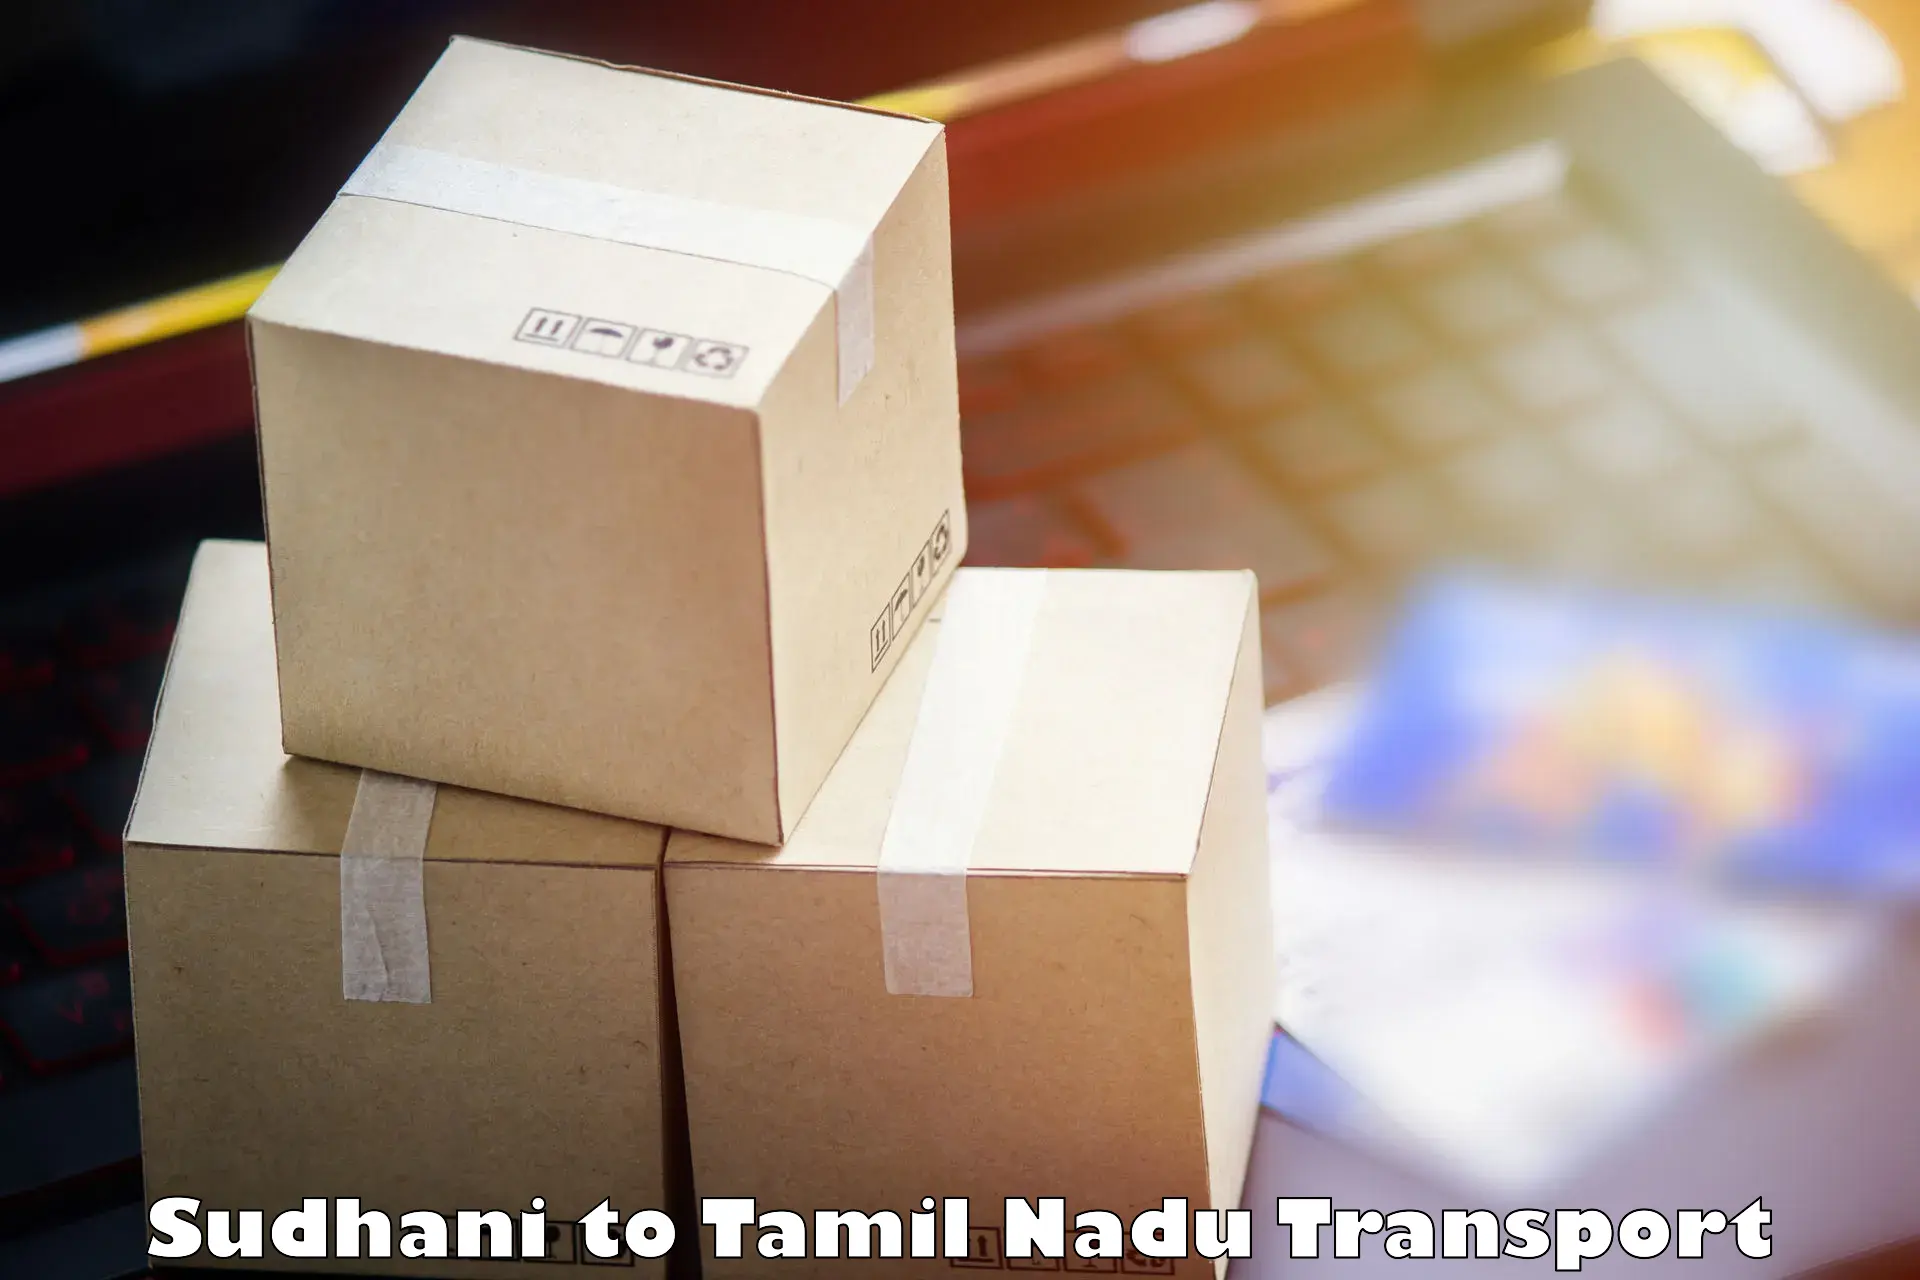 Daily transport service Sudhani to Anna University Chennai